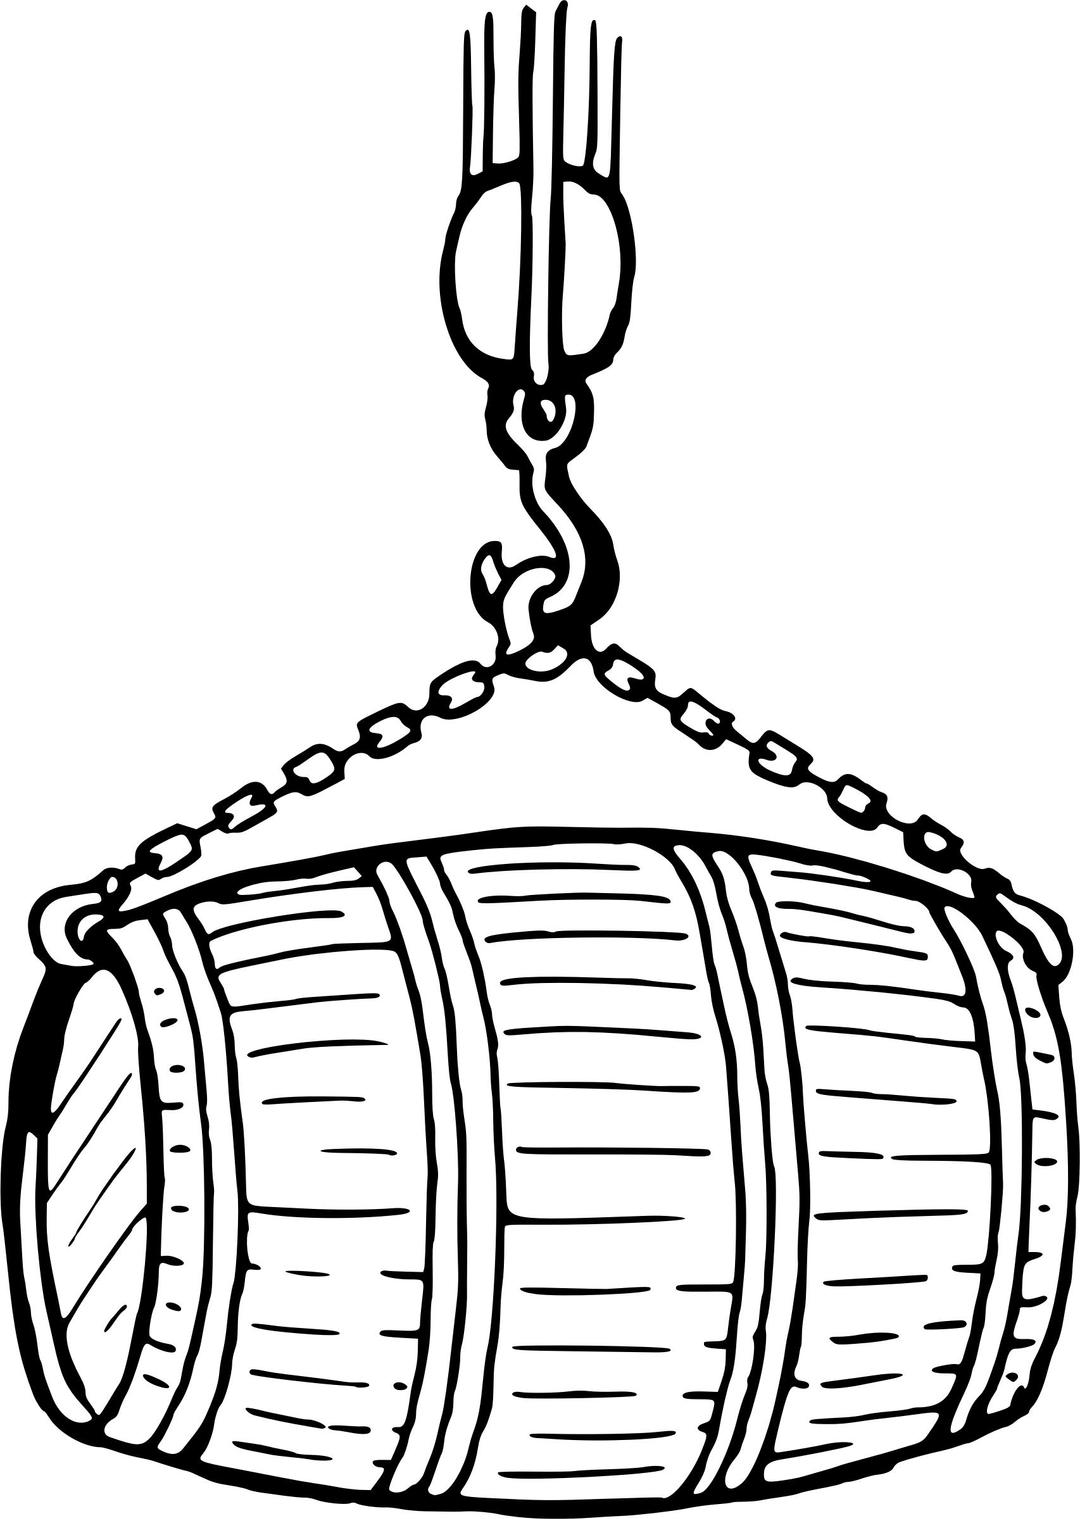 Barrel in a sling png transparent